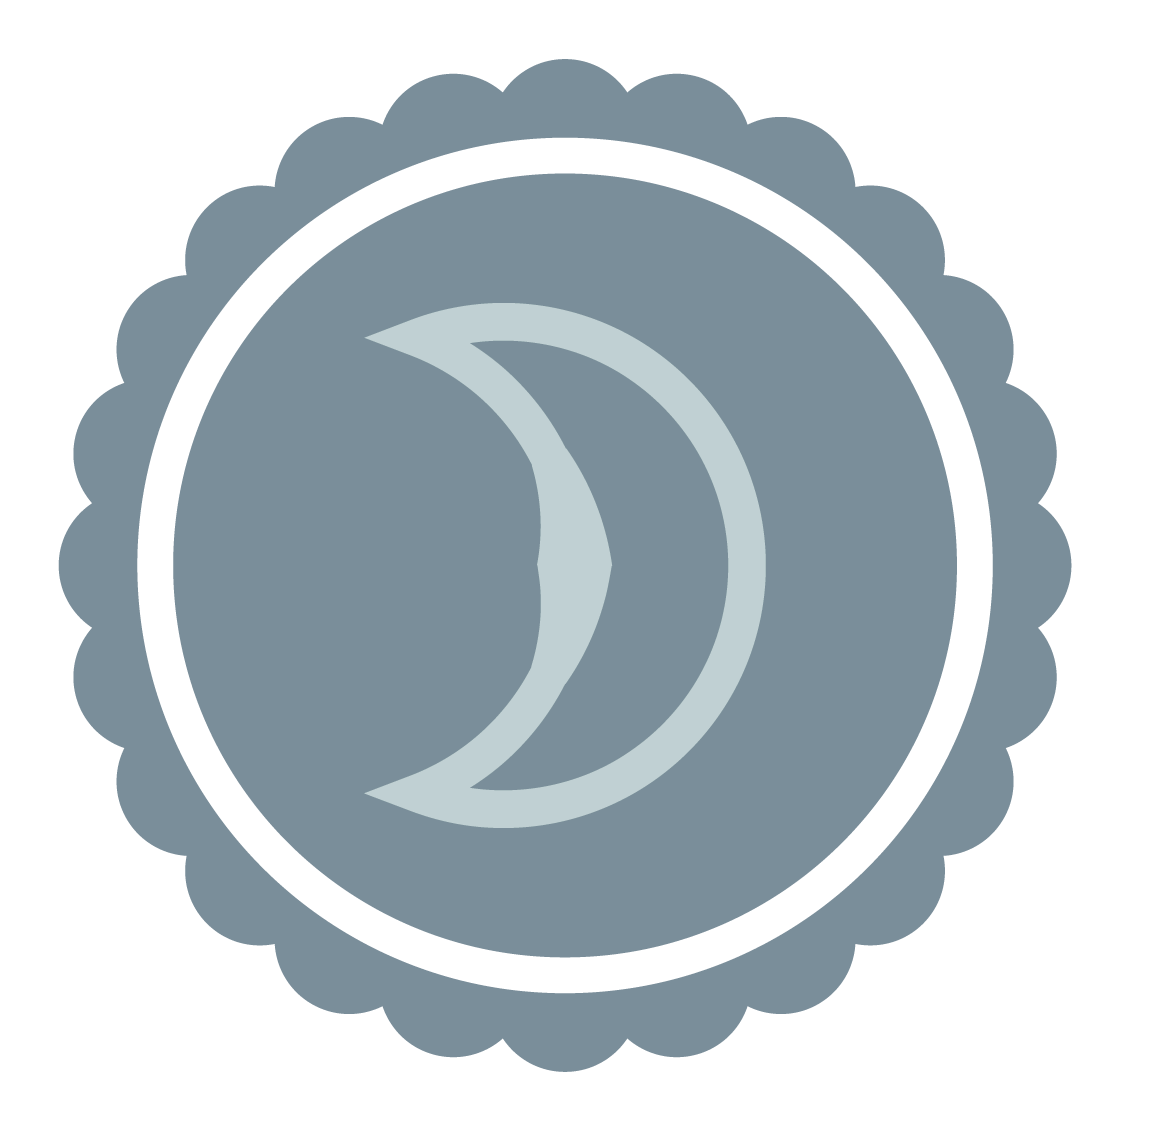 A Crescent Moon in light blue font on a darker blue background badge